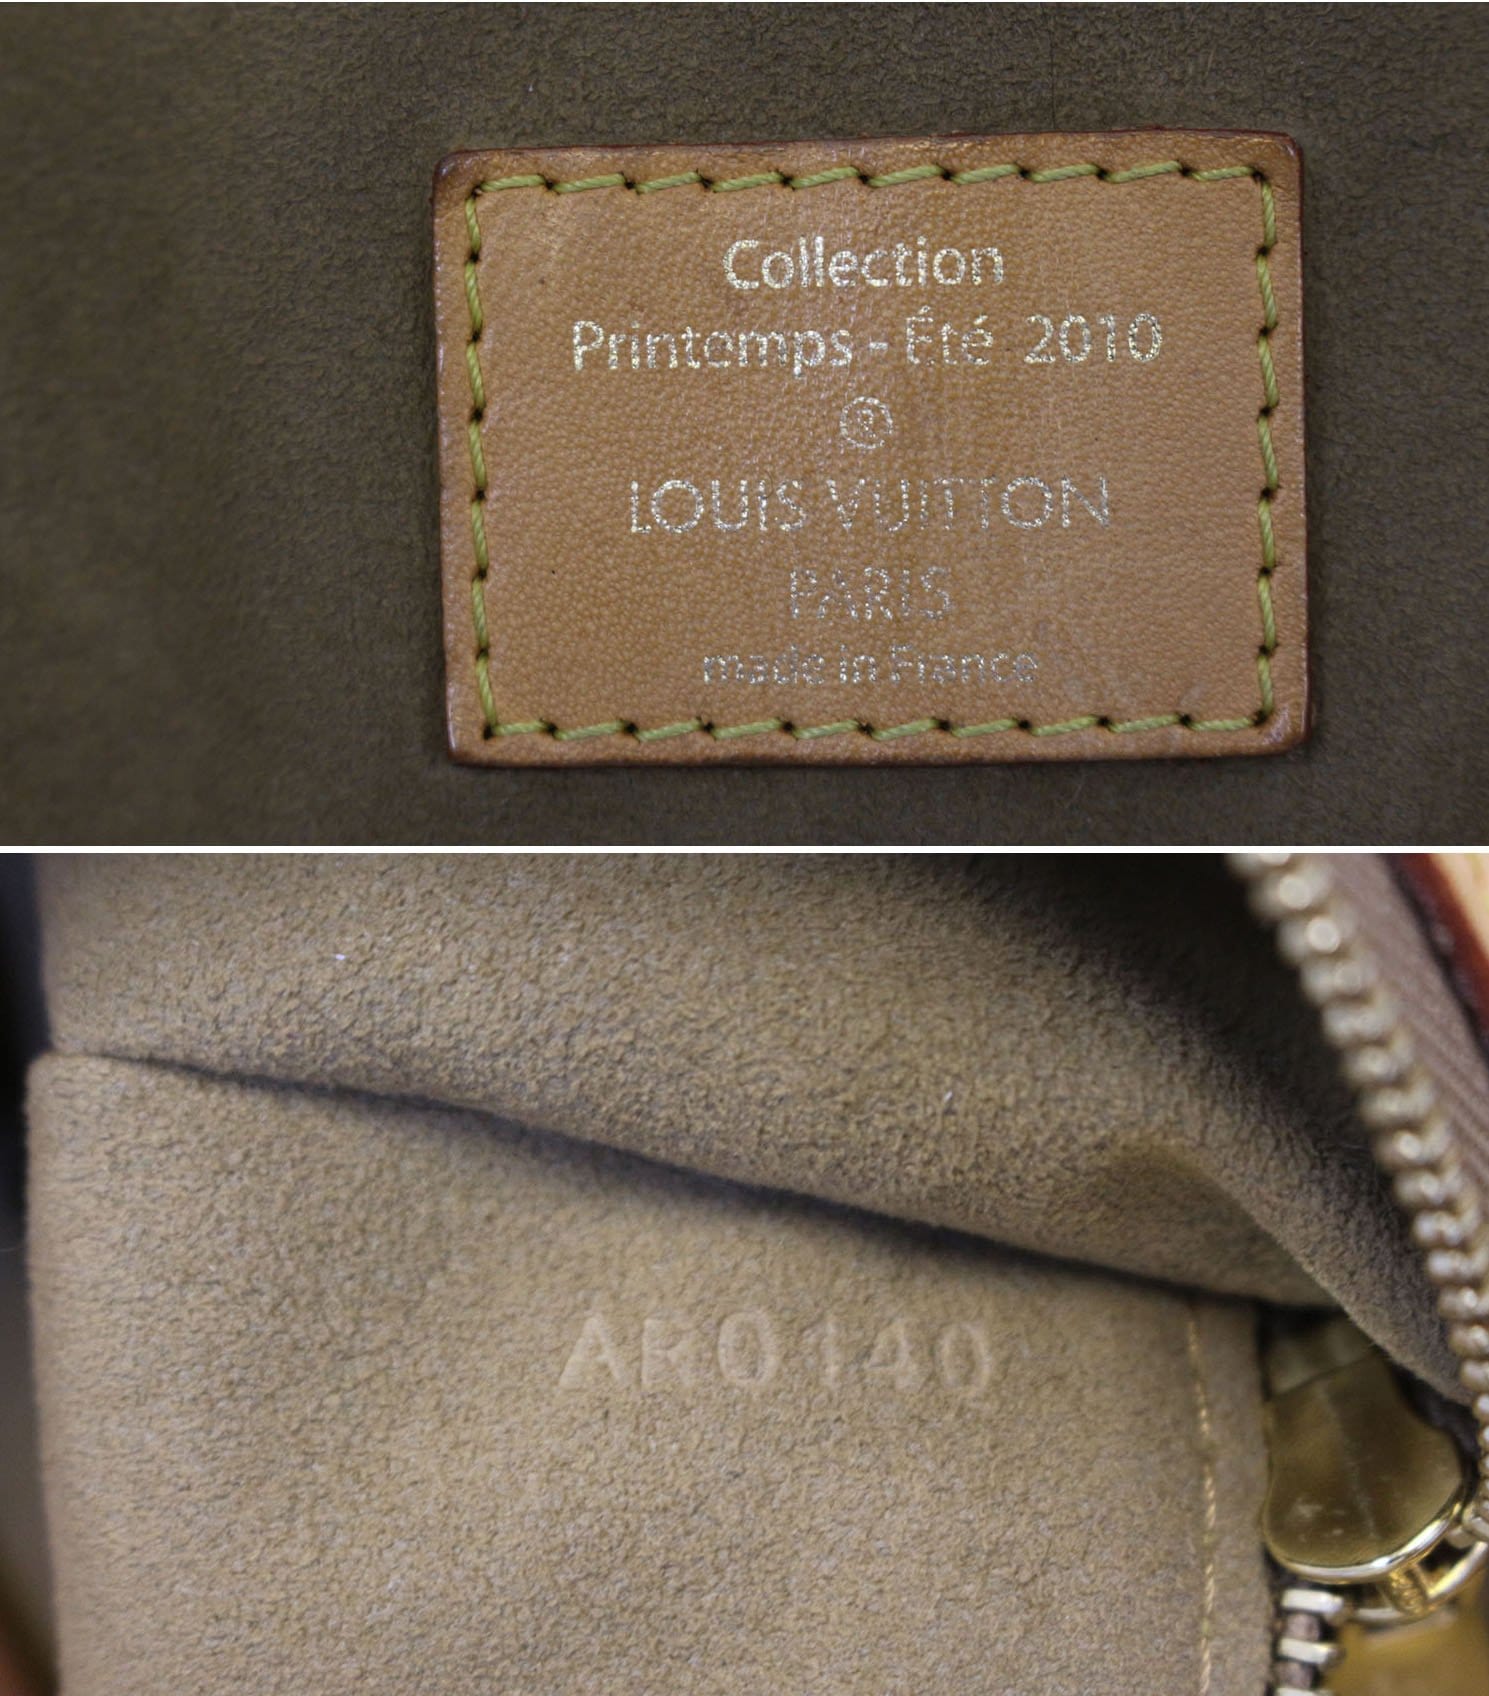 Louis Vuitton Limited Edition Kaki Monogram Eden Noe Bag - ShopperBoard